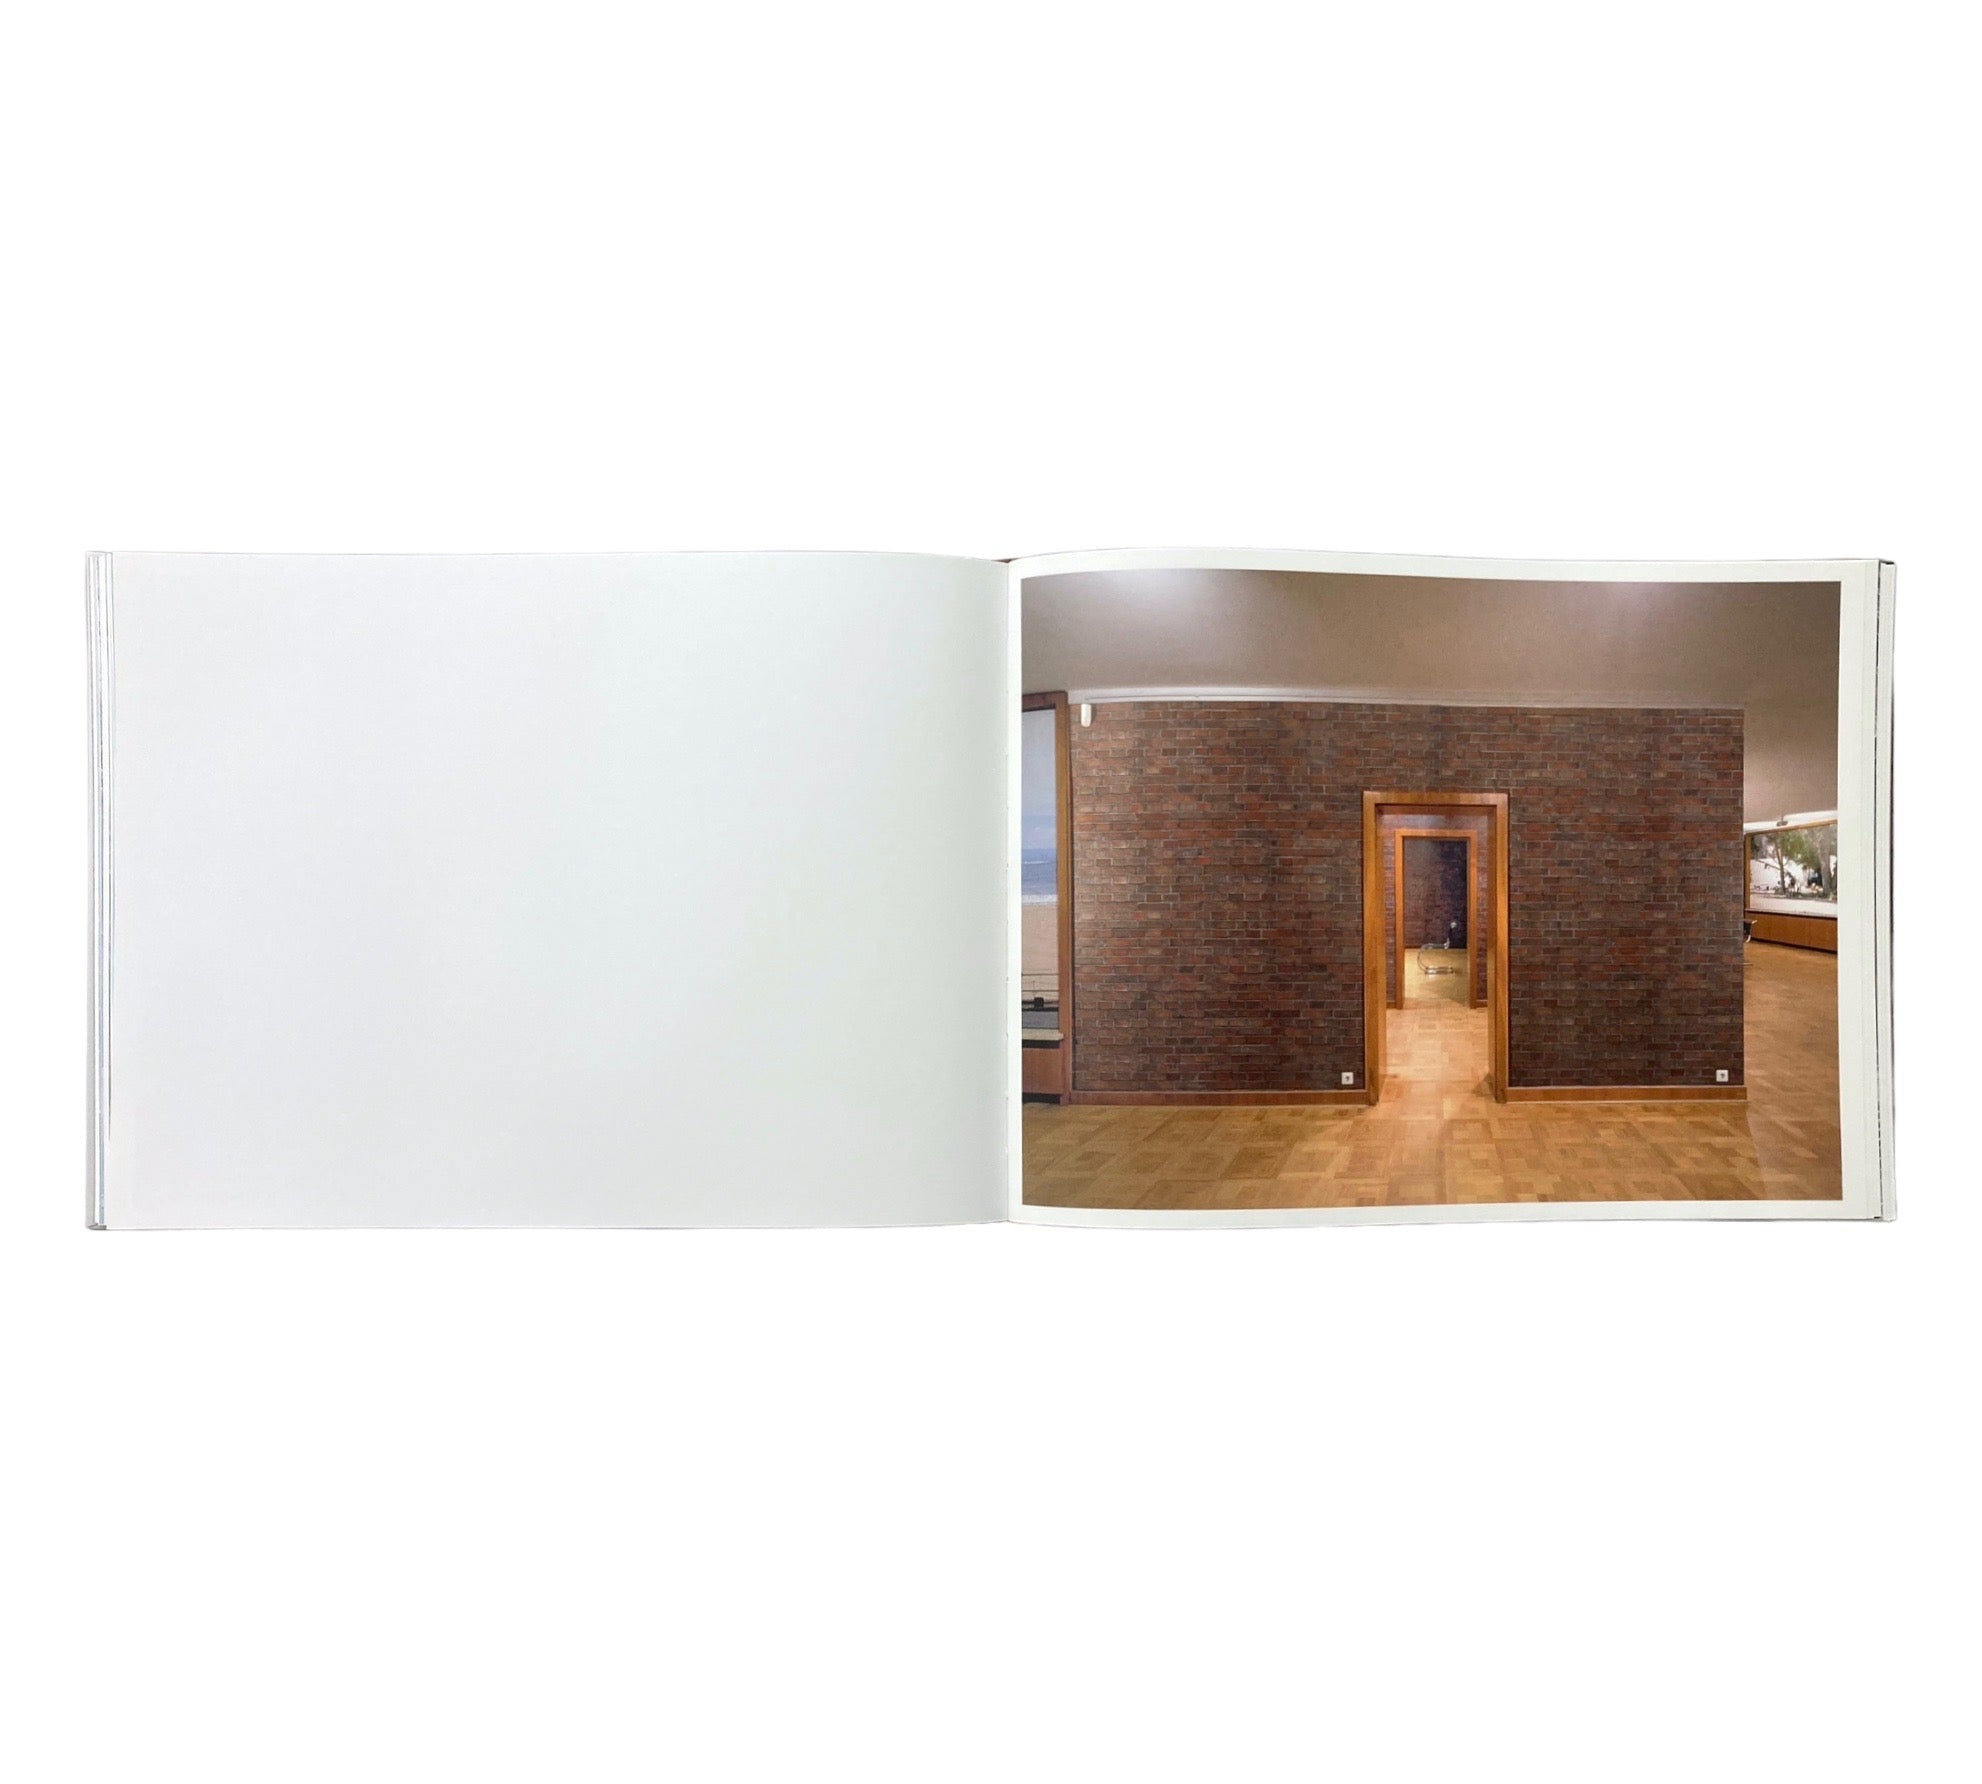 John Baldessari: Brick Bldg, Lg Windows W/xlent Views, Partially Furnished, Renowned Architect - (Non-mint)